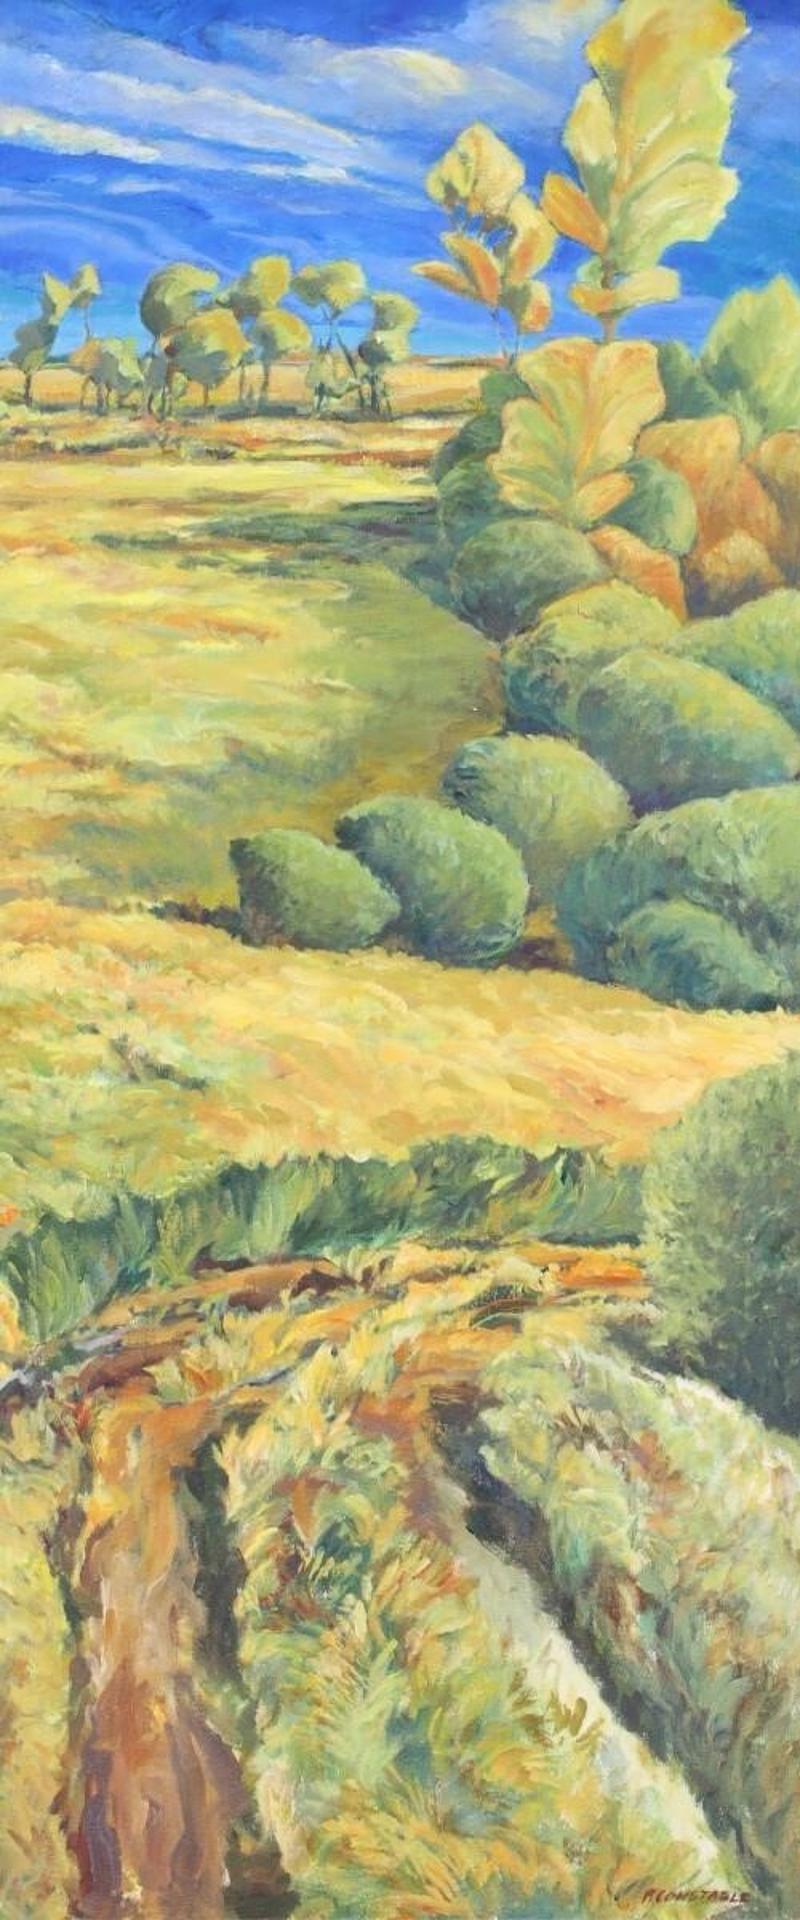 Paul Constable (1953) - Between Two Fields